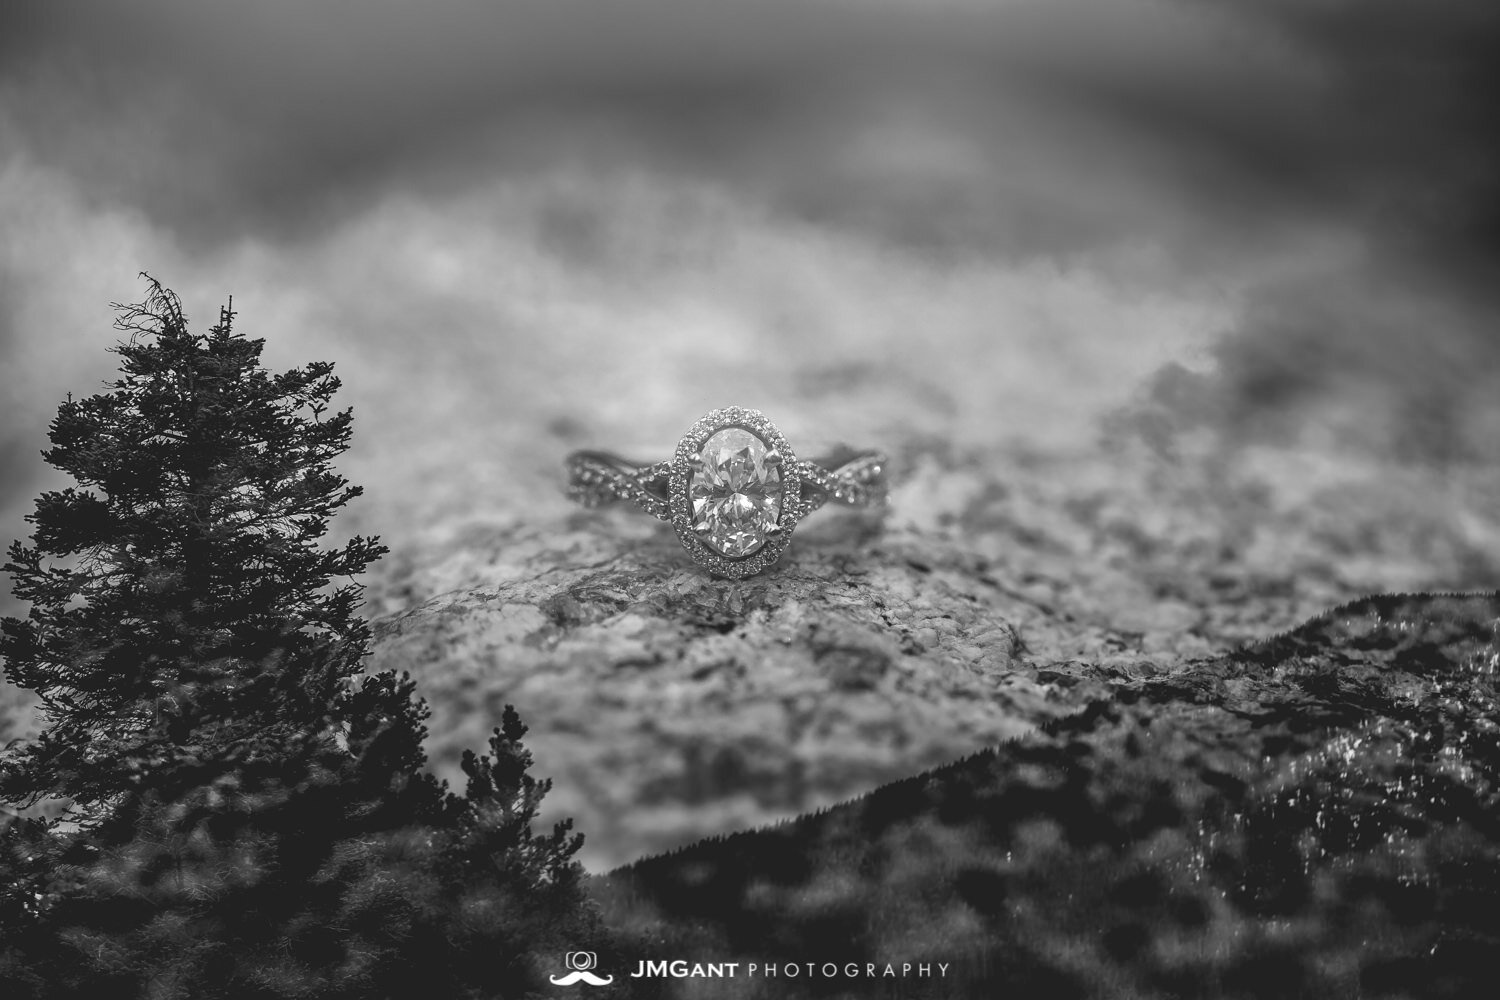  Double exposure wedding ring photo by JMGant Photography. 